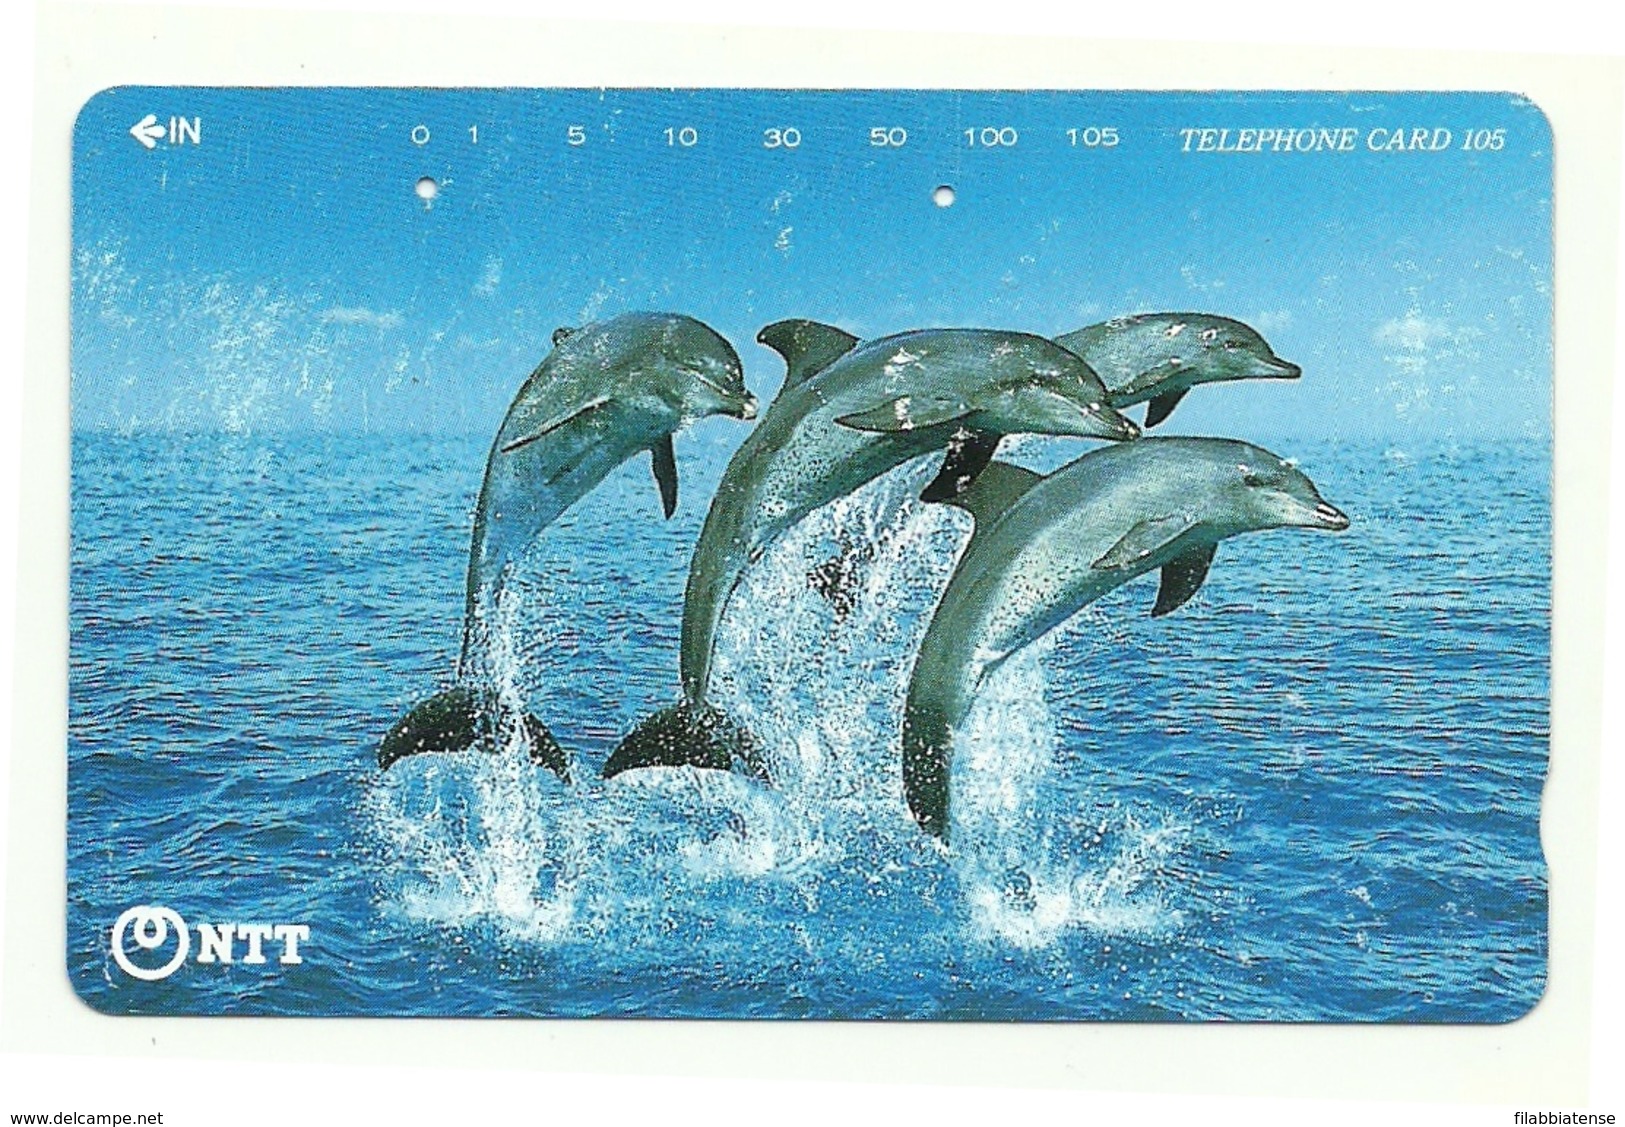 Giappone - Tessera Telefonica Da 105 Units T459 - NTT - Dolphins